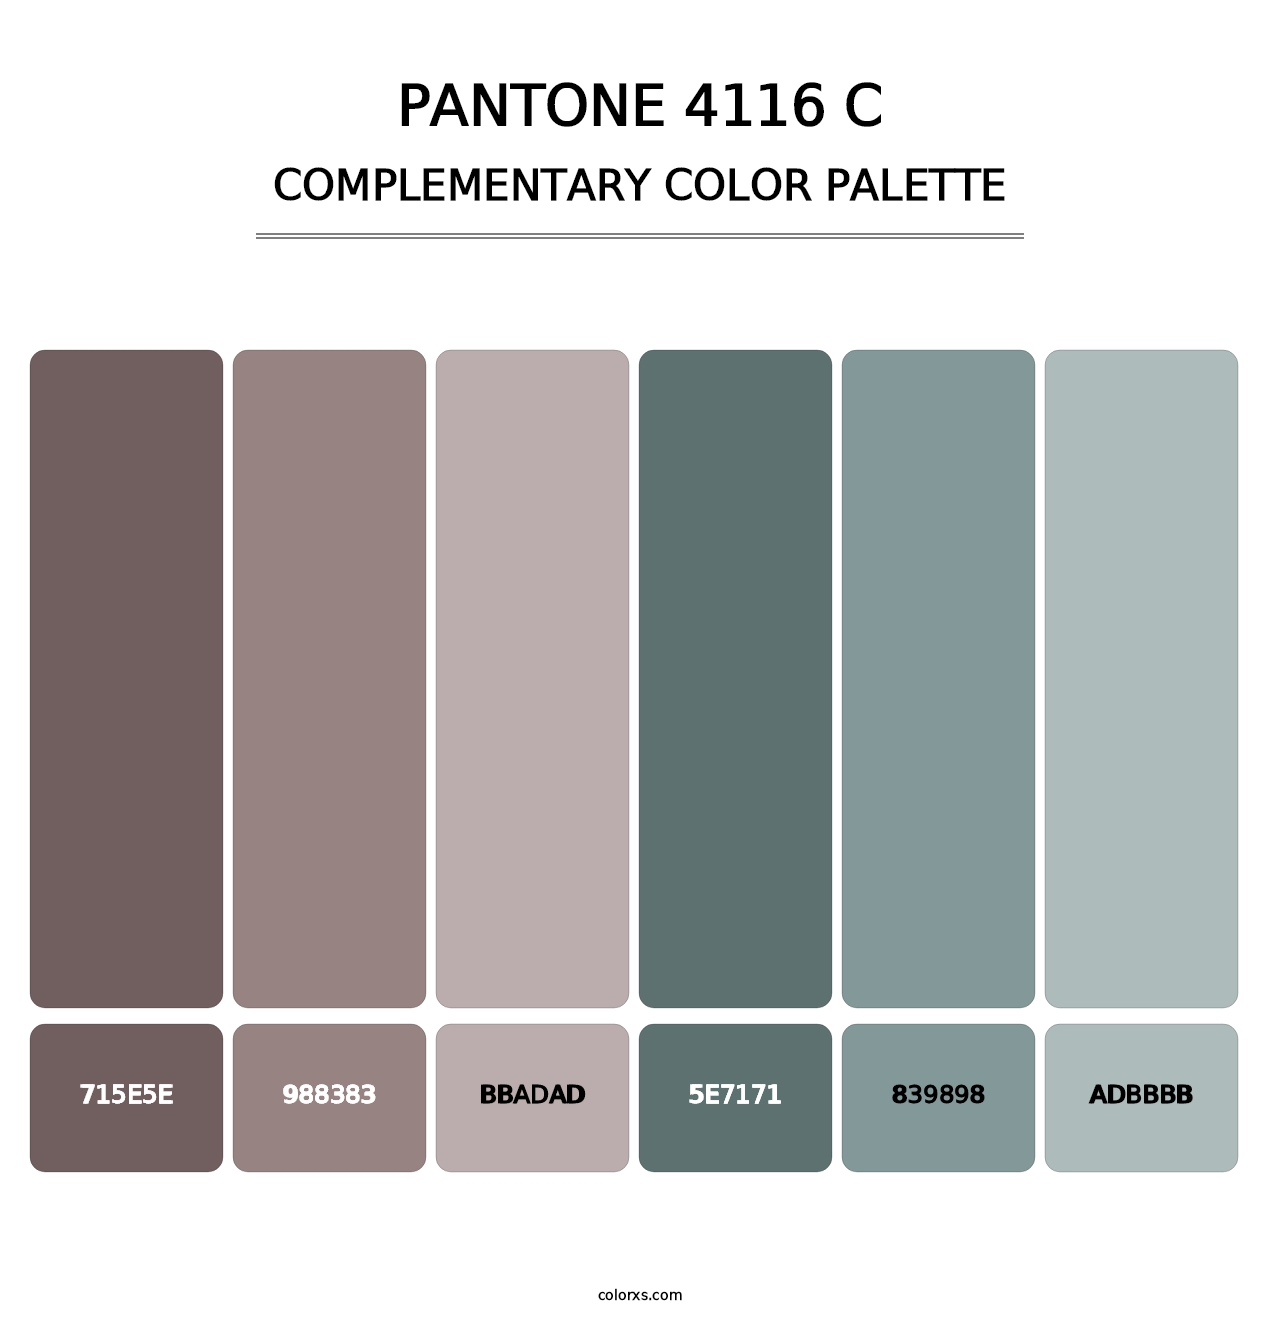 PANTONE 4116 C - Complementary Color Palette